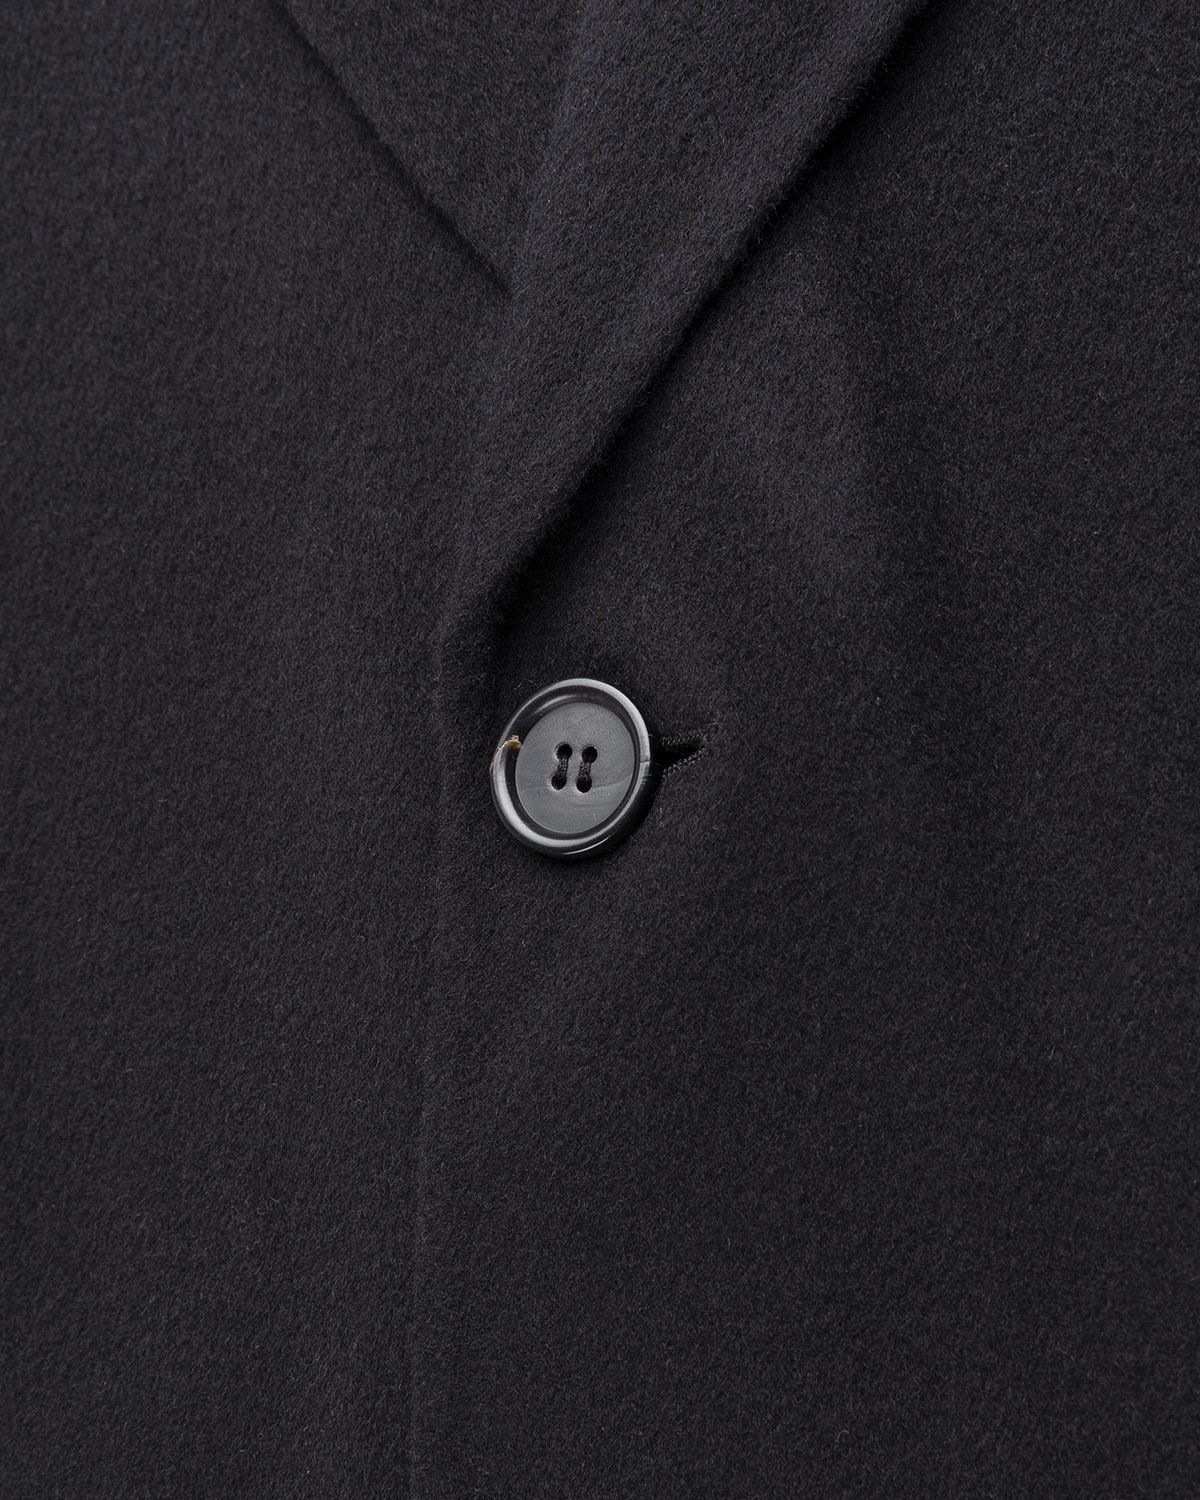 Acne Studios – Doubleface Coat Black - Trench Coats - Black - Image 4